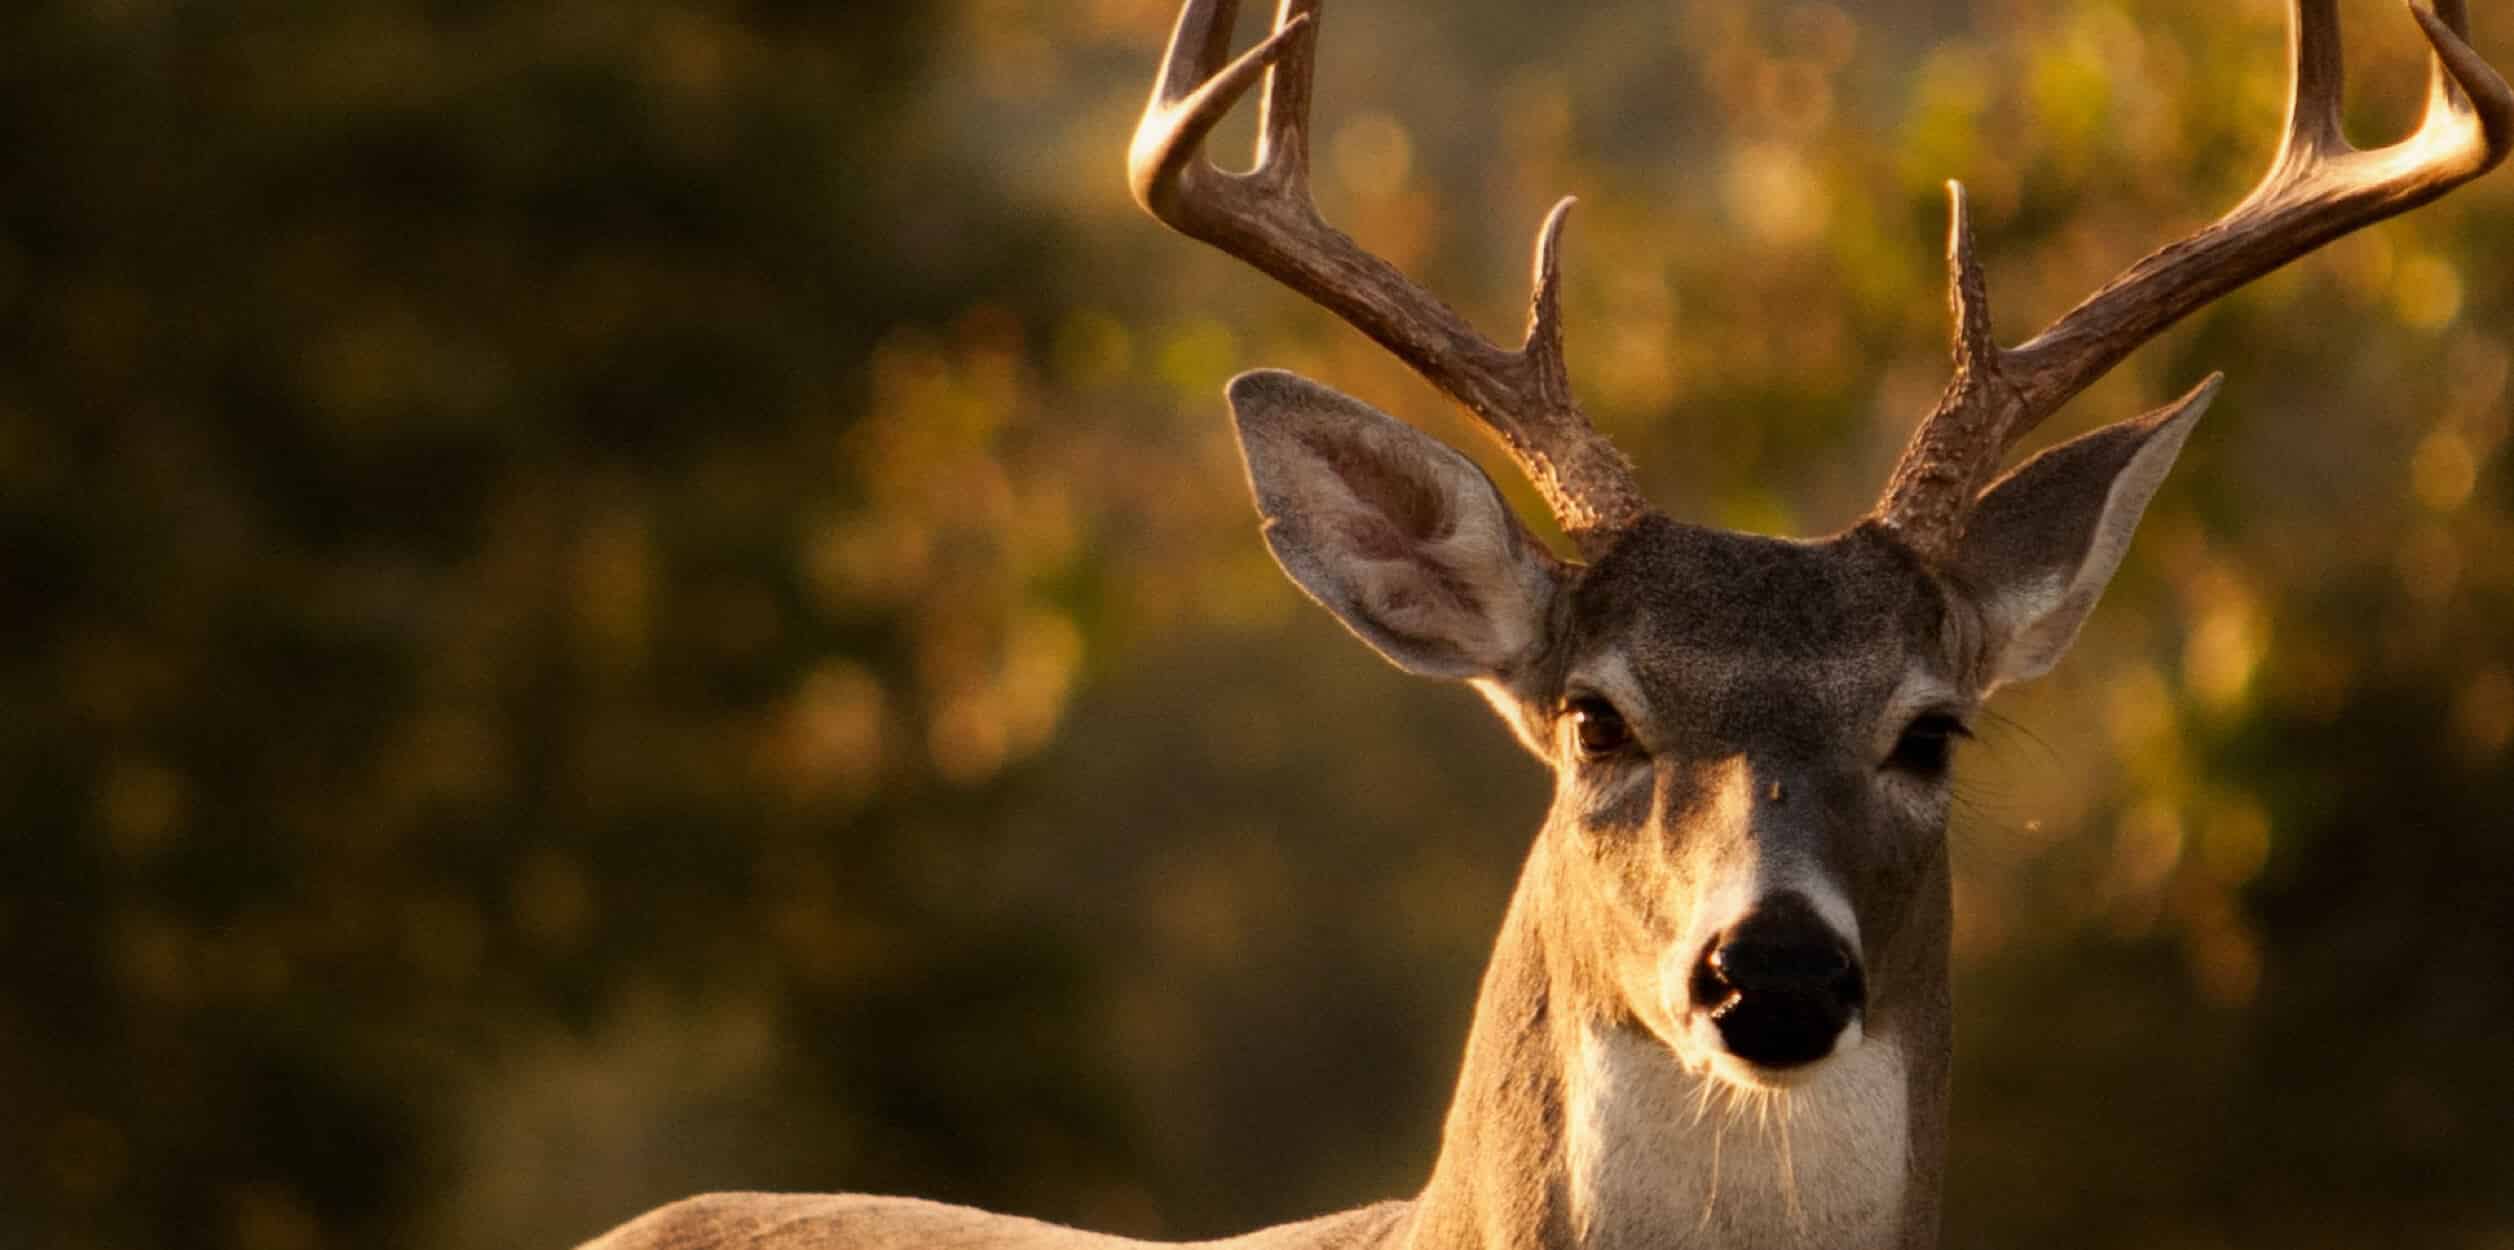 Deer staring into camera